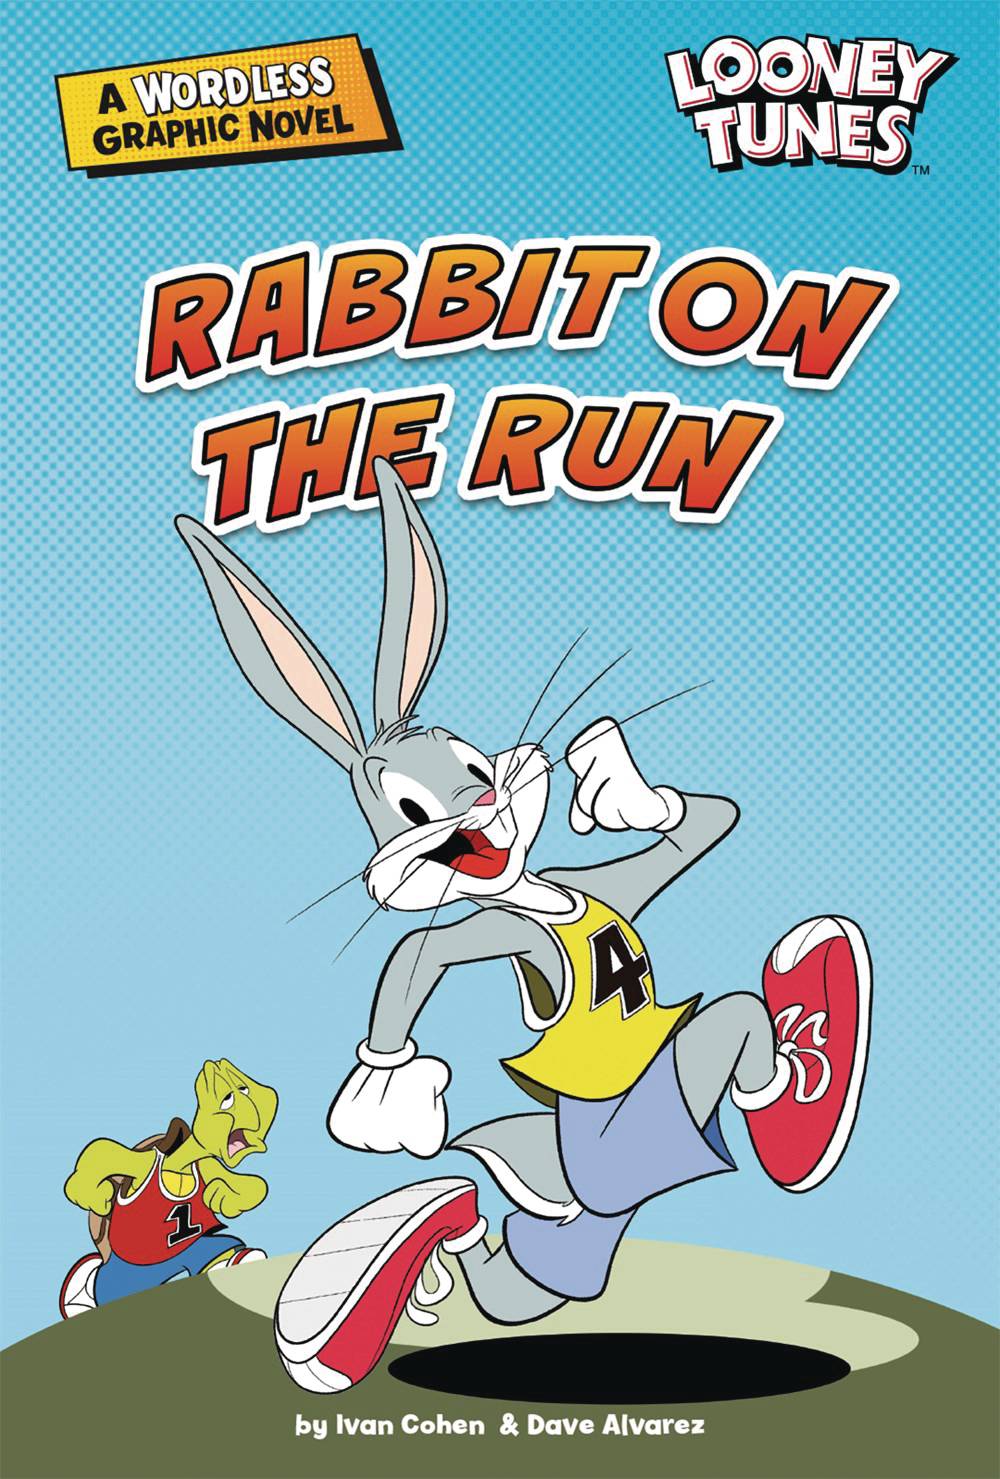 Looney Tunes: Rabbit On The Run - A Wordless Graphic Novel